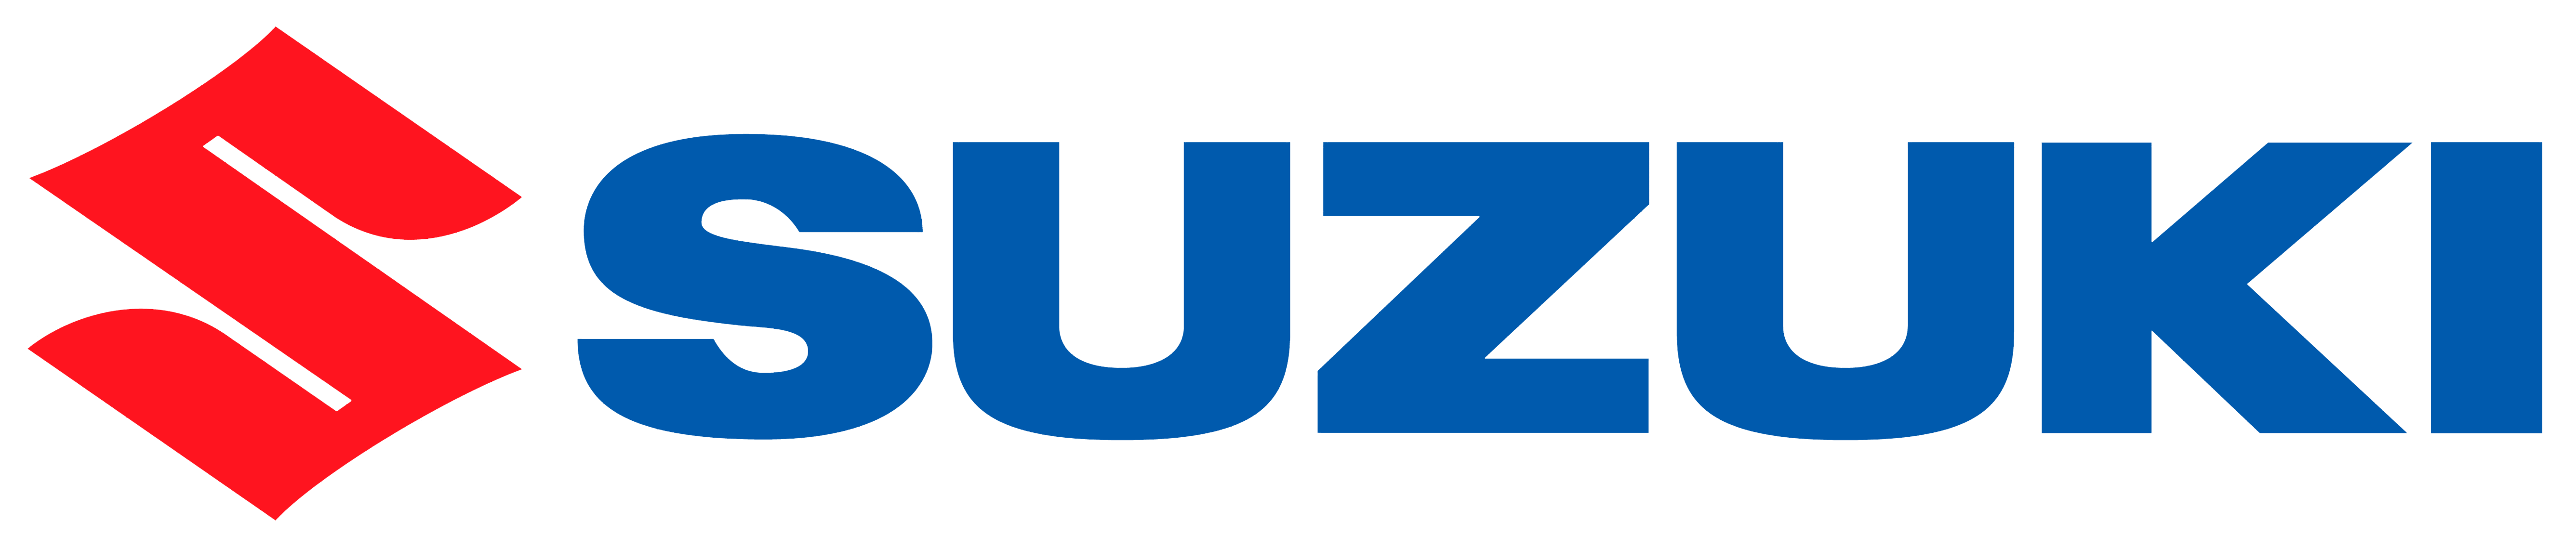 Suzuki motorcycle logo history and Meaning, bike emblem